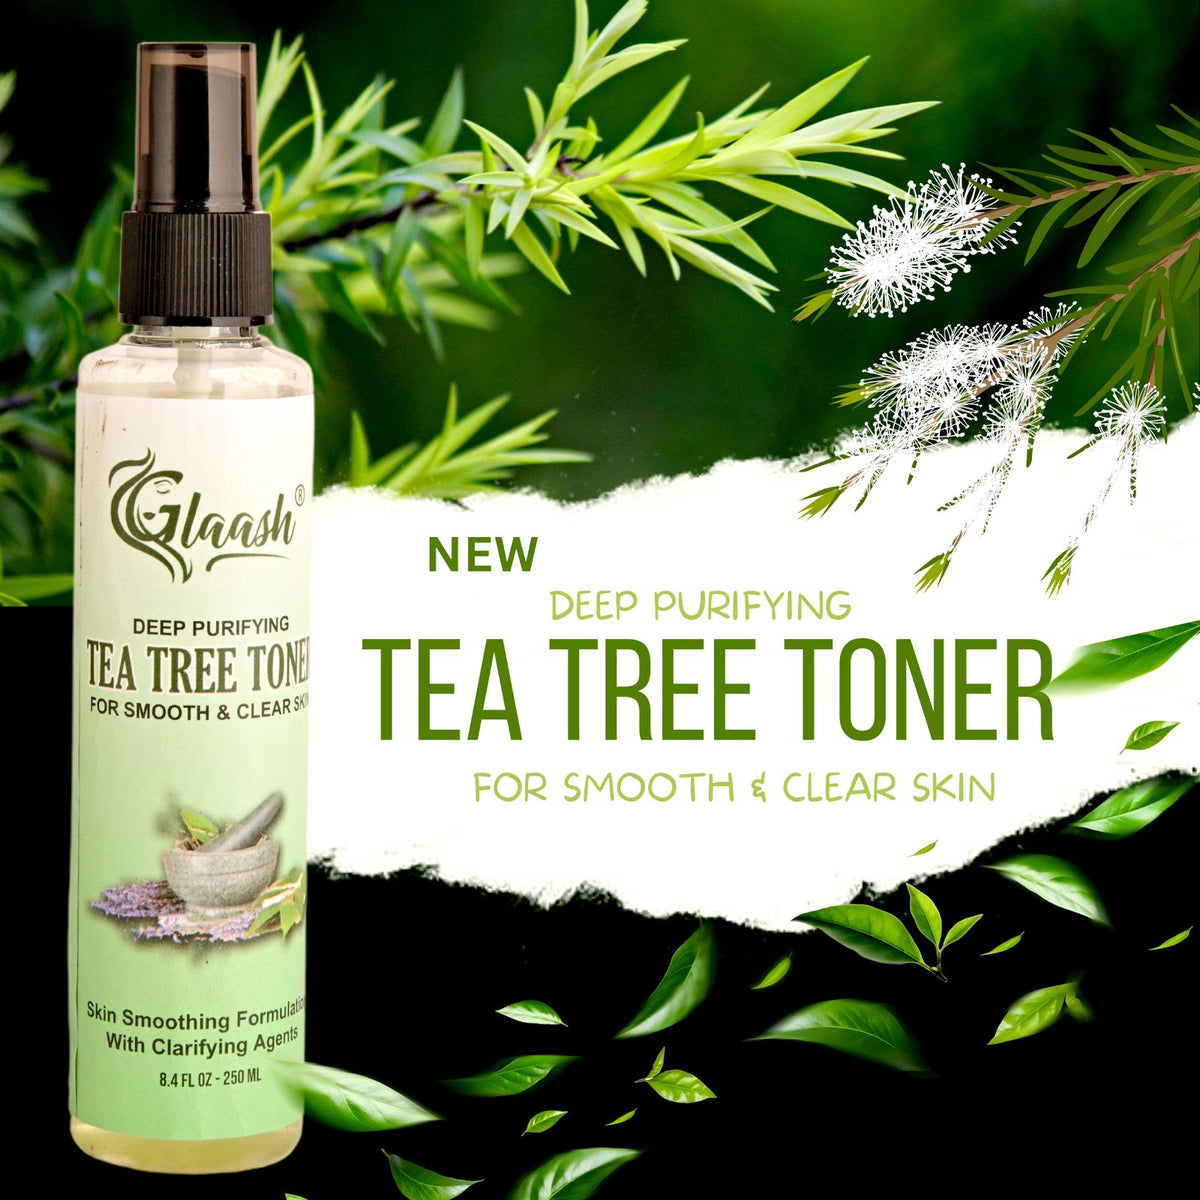 Glaash Pack of 03 Tint + Soap + Toner | Plum Fatale Tint + Menthol Organic Soap + Tea Tree Toner